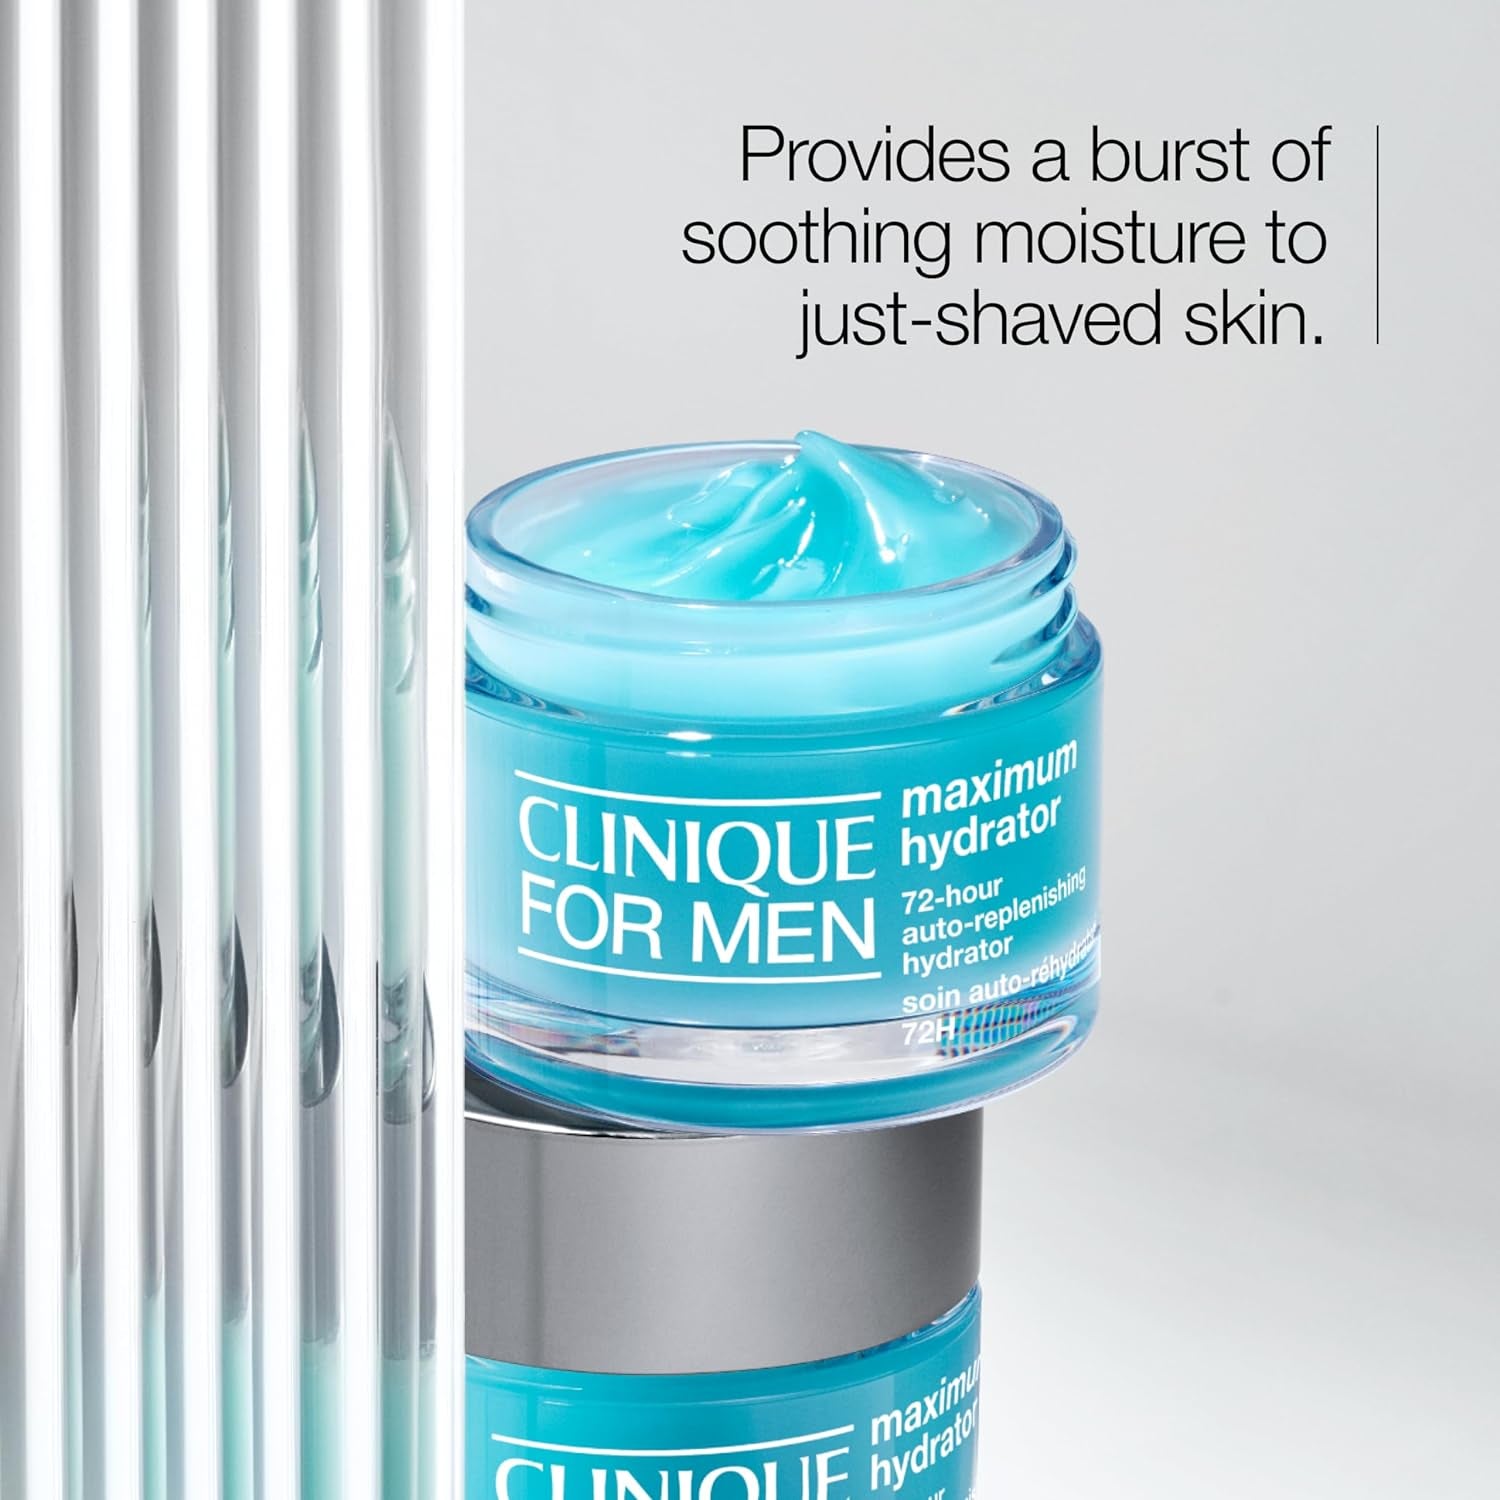 Clinique for Men Maximum Hydrator 72-Hour Auto-Replenishing Hydrating Facial Moisturizer